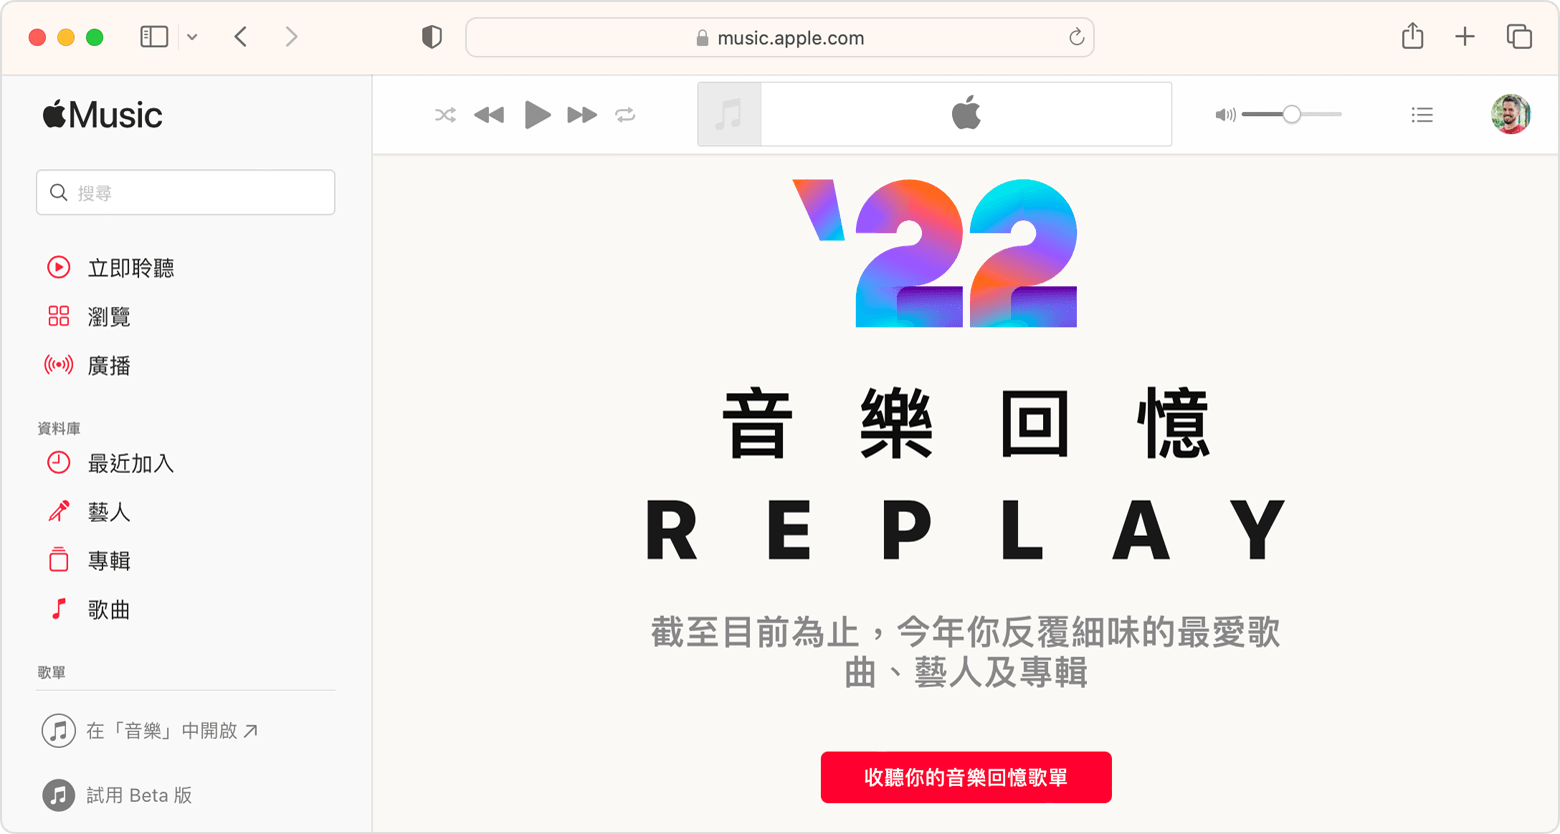 Safari 視窗正在顯示 replay.apple.com 的「收聽你的音樂回憶歌單」按鈕